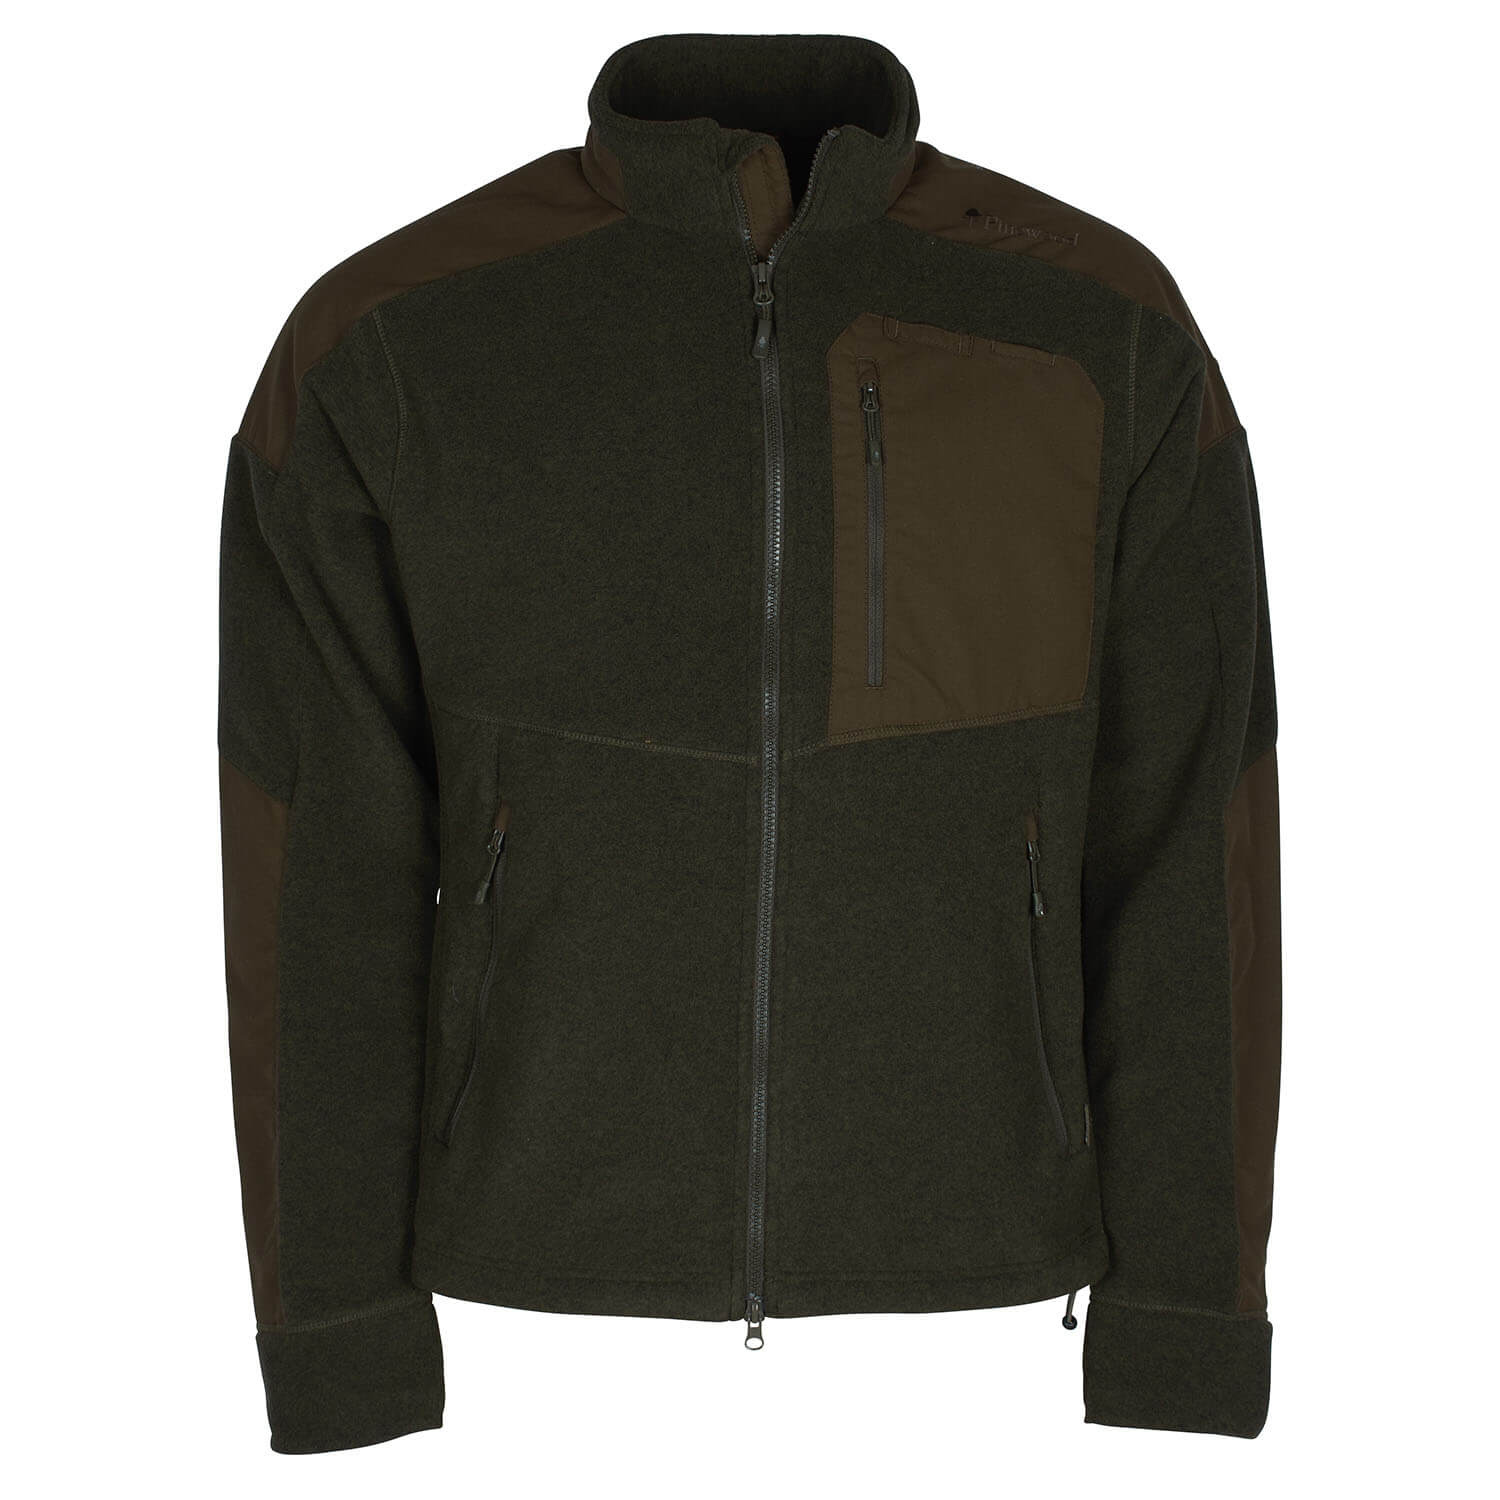 Pinewood Fleece jacket Smaland Forest